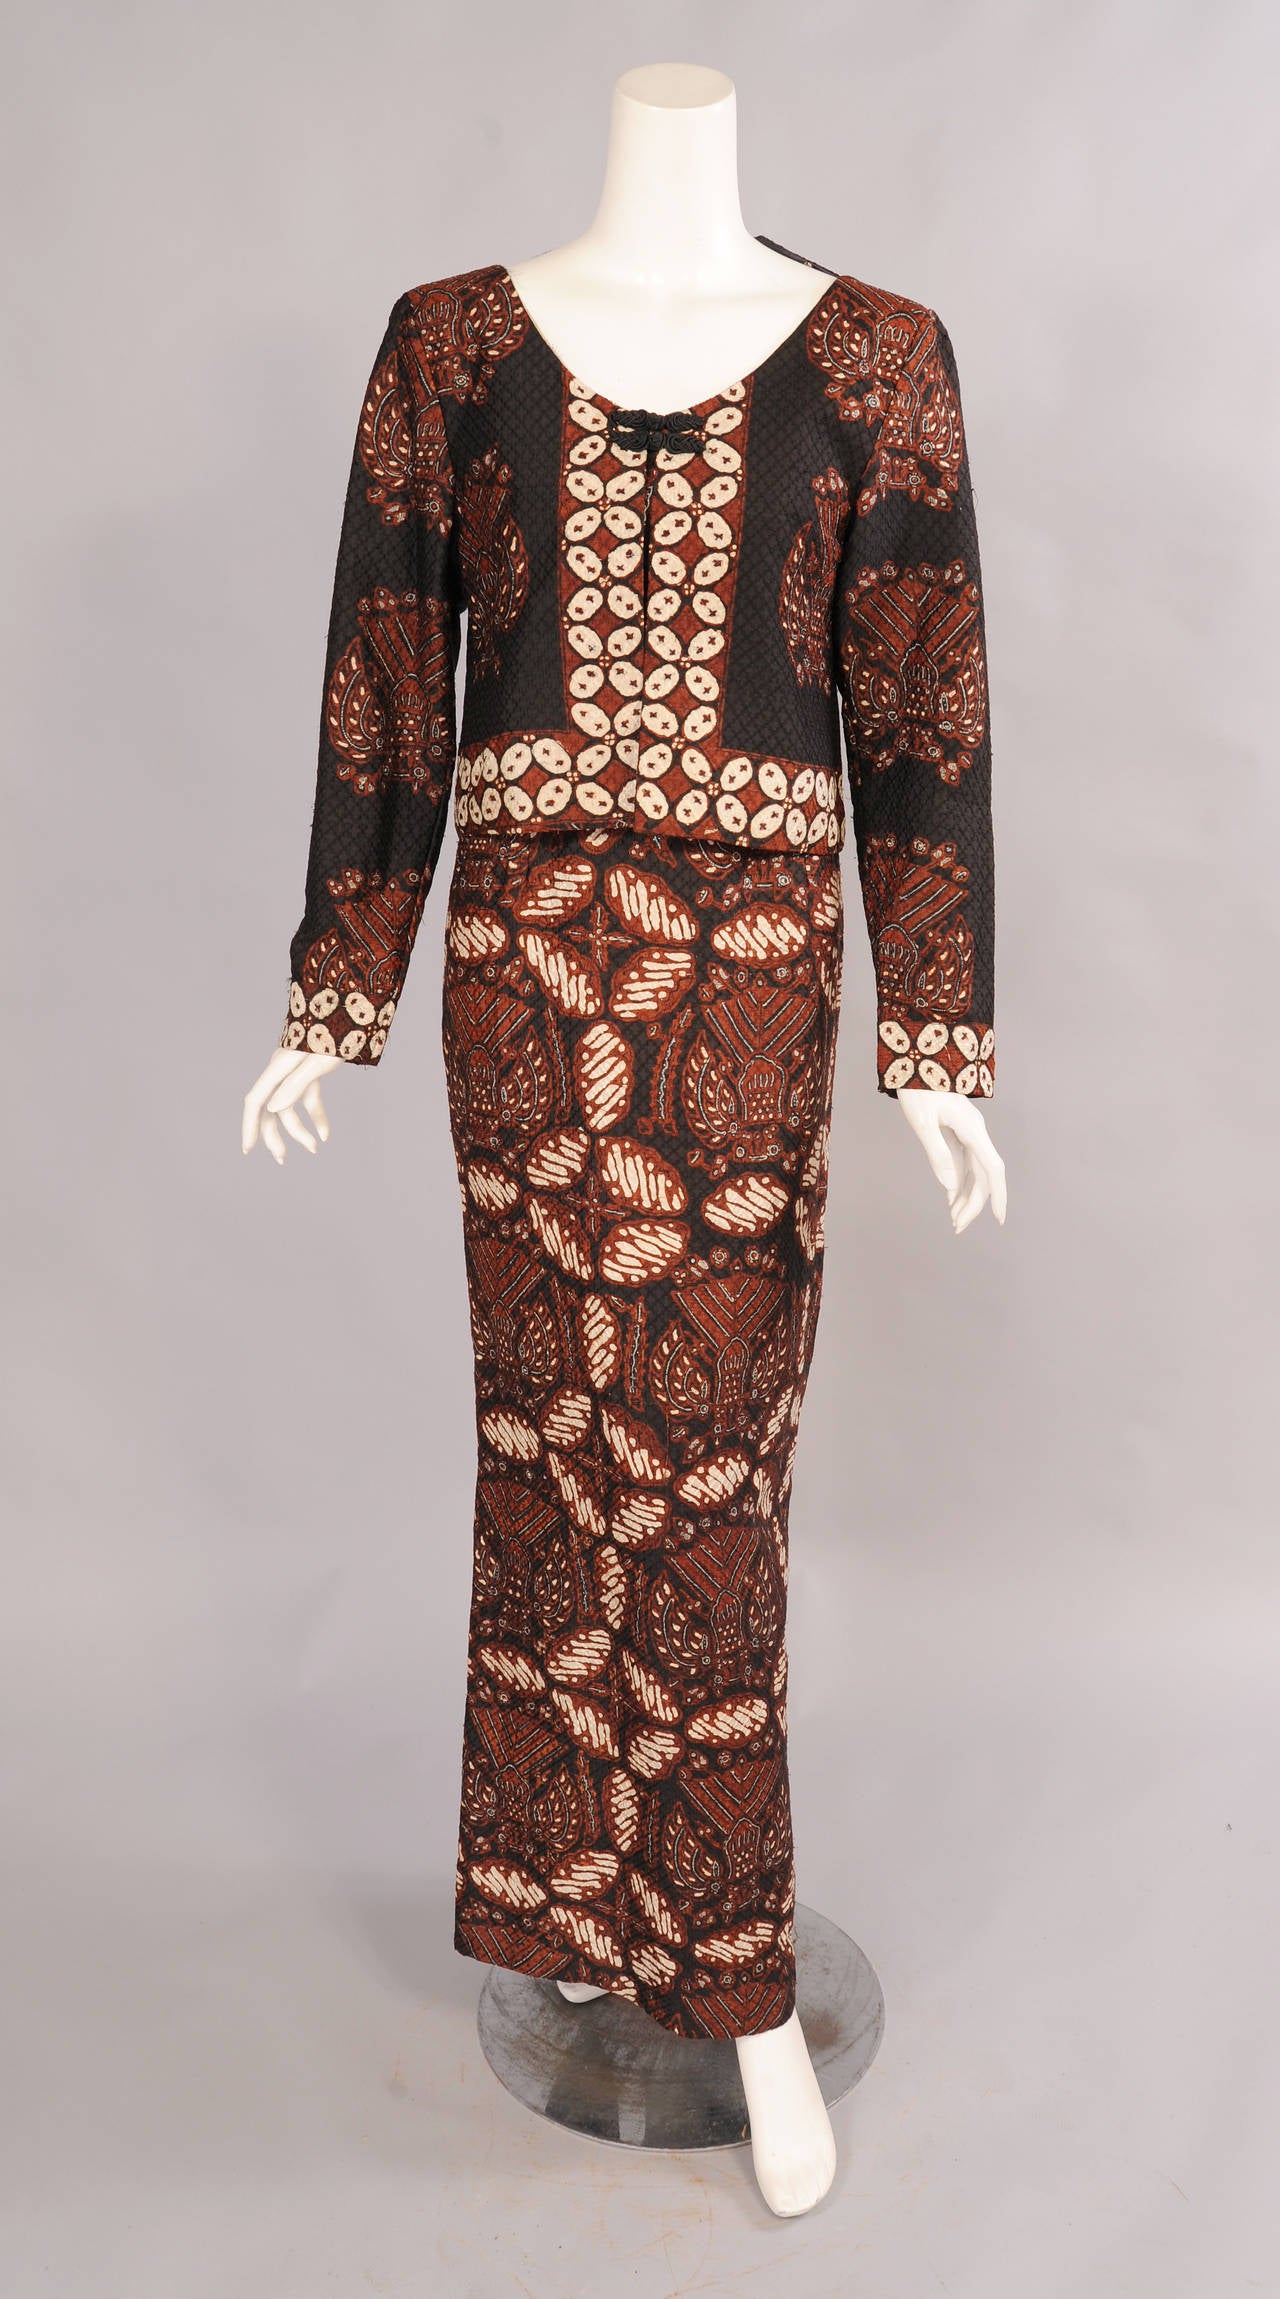 Indonesian Silk Batik  Dress and Jacket For Sale at 1stdibs